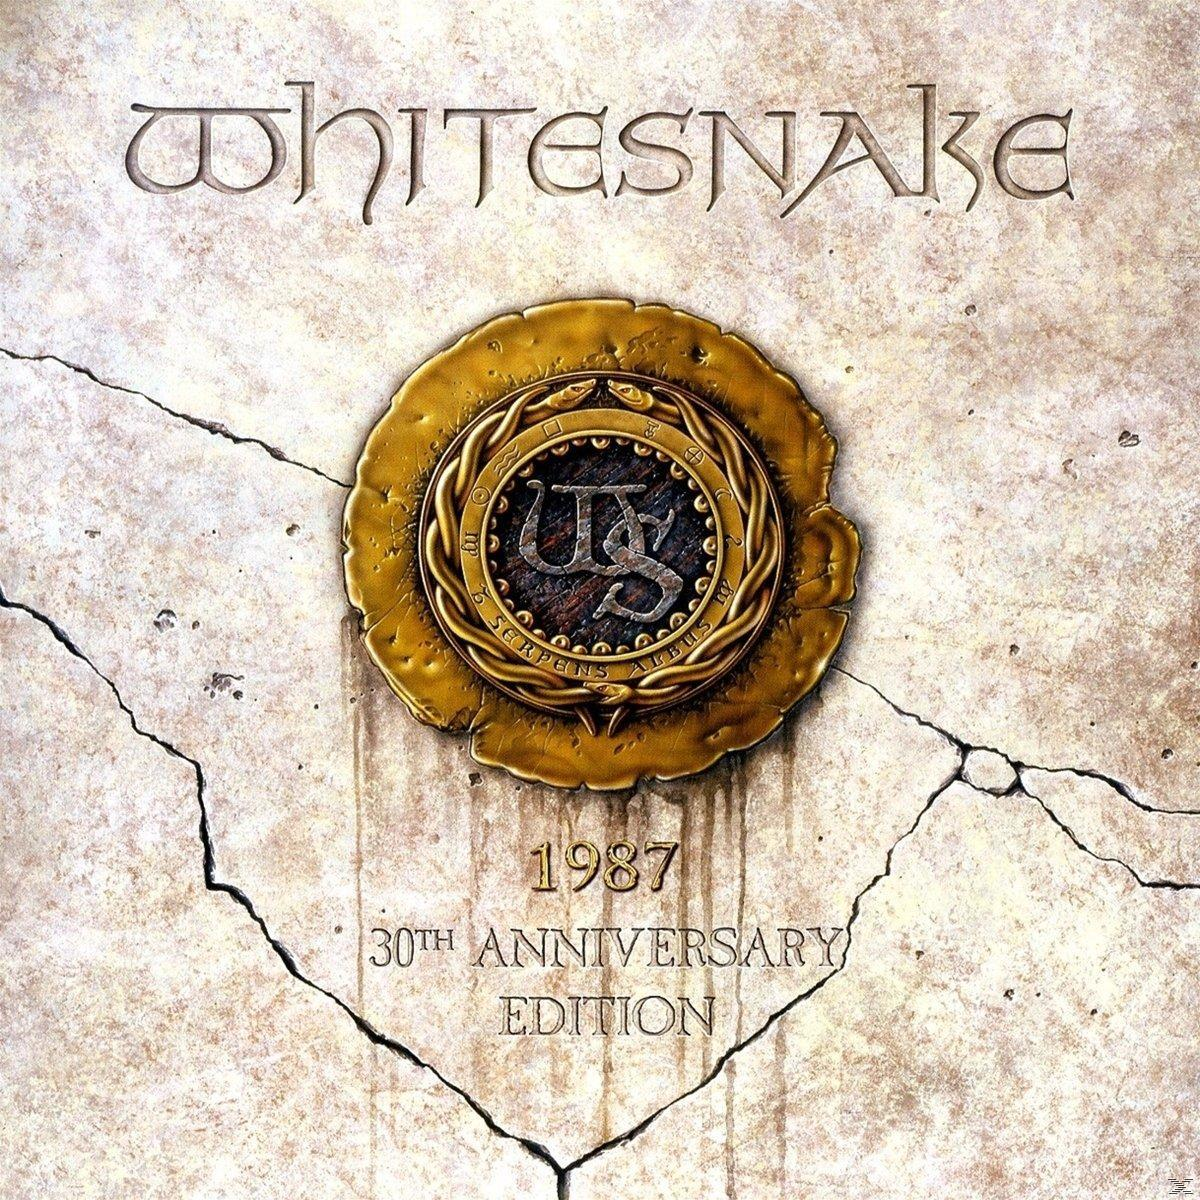 (Vinyl) 1987 Edition) - Whitesnake Anniversary (30th -